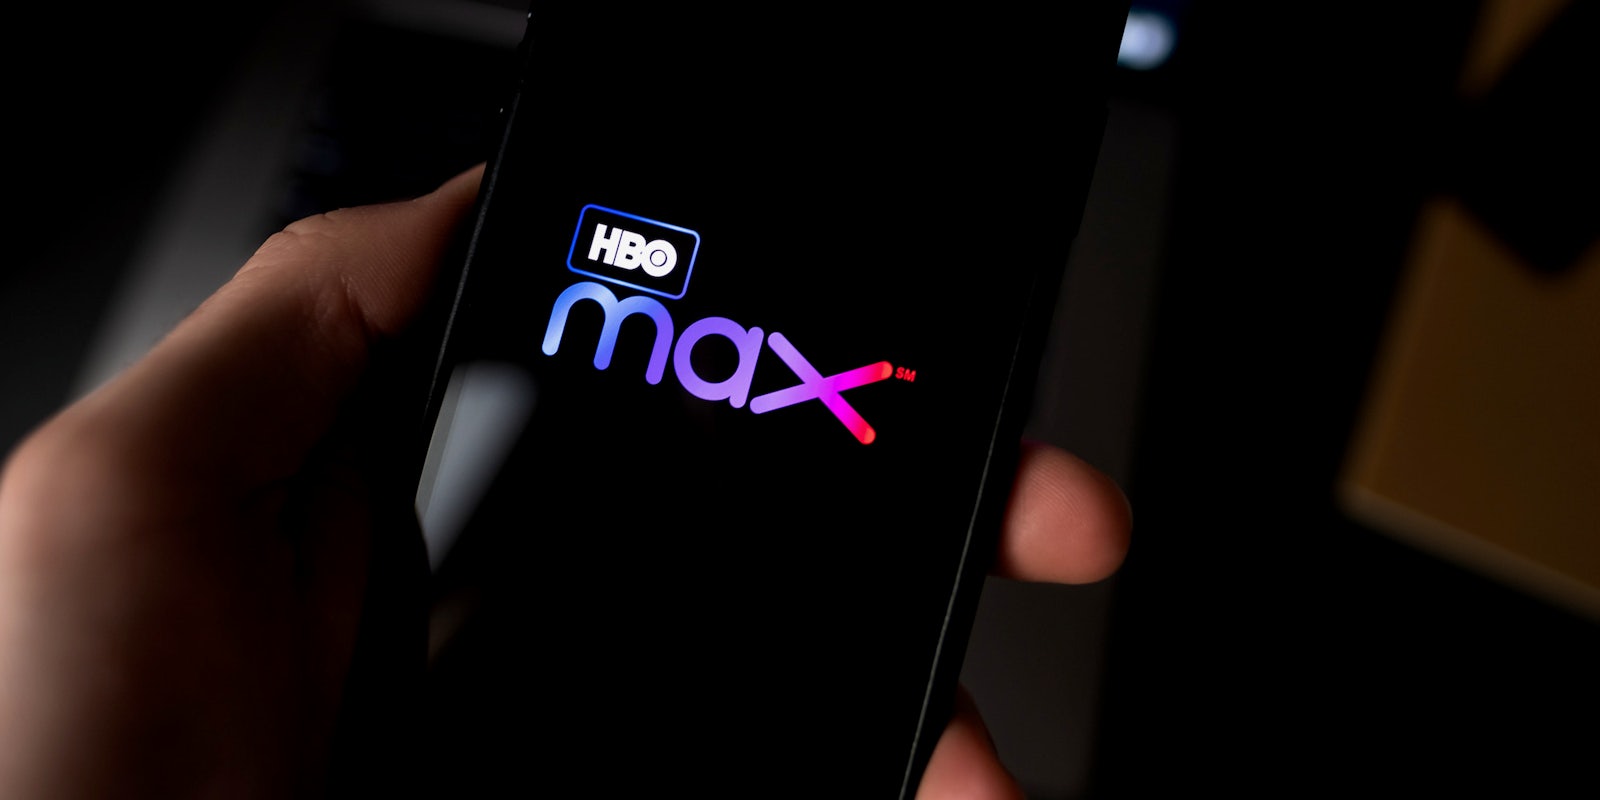 HBO max logo on smartphone screen